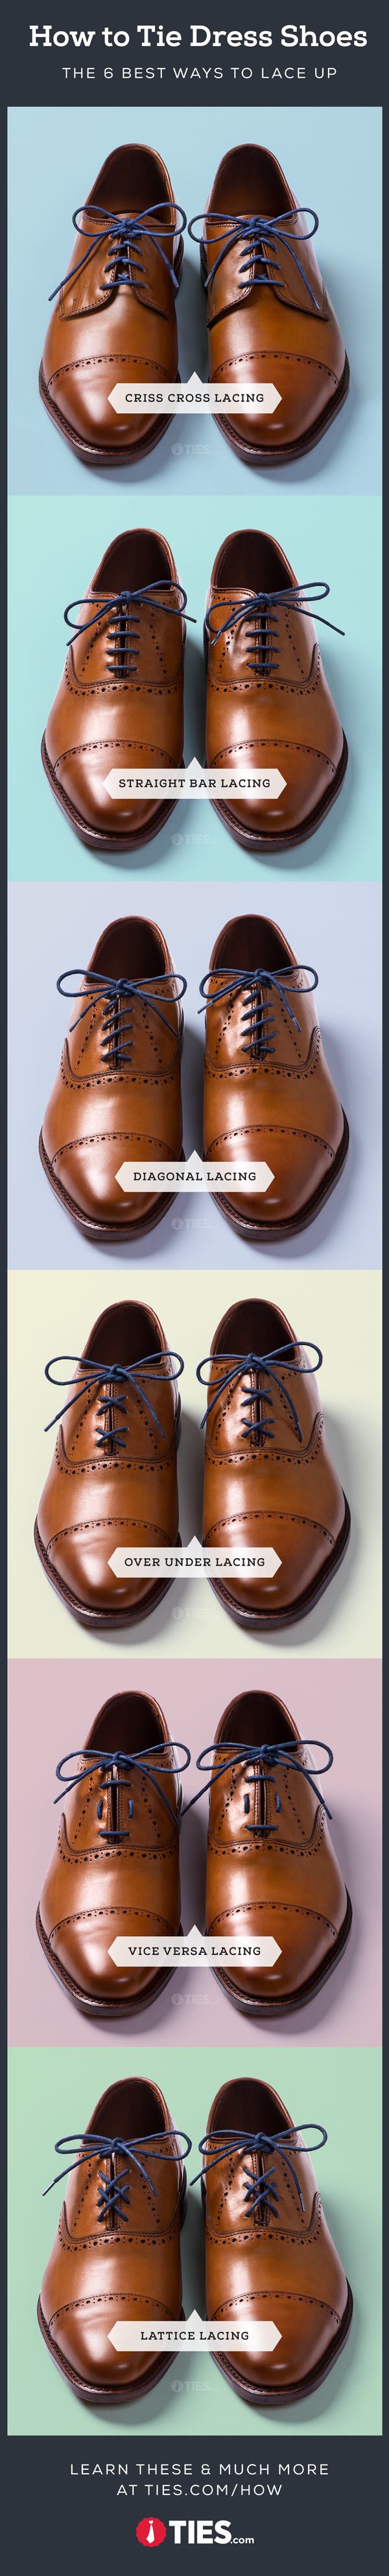 A Visual Comparison of Dress Shoe Lacing Methods